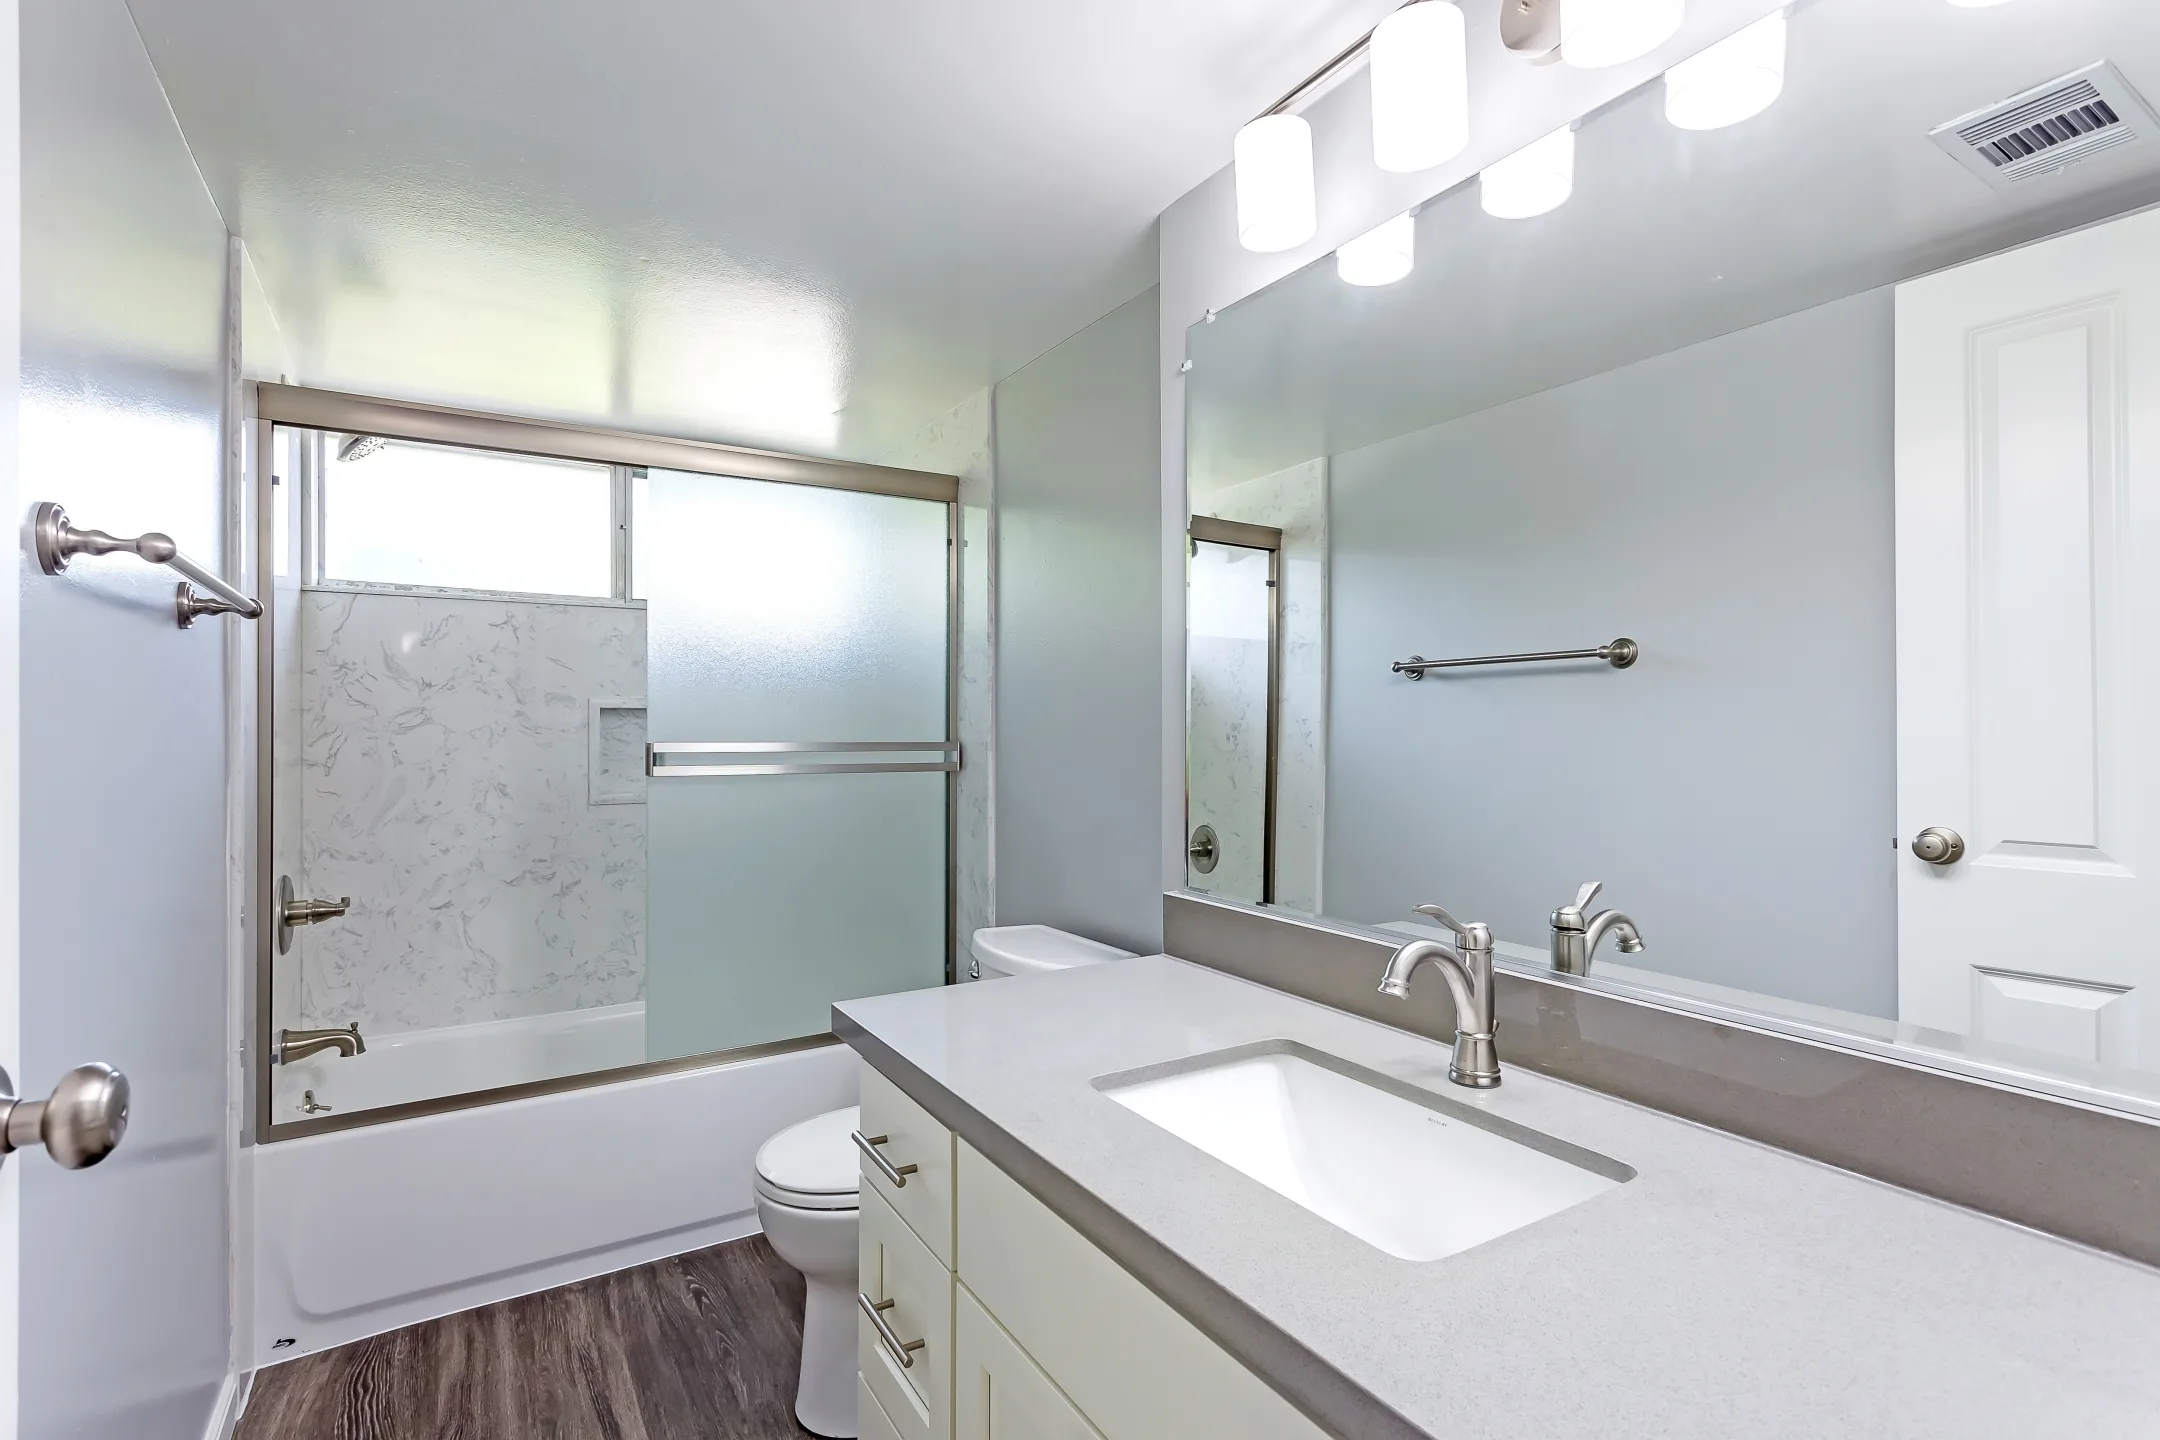 Bathroom - Parksquare Apartments - Palo Alto, CA